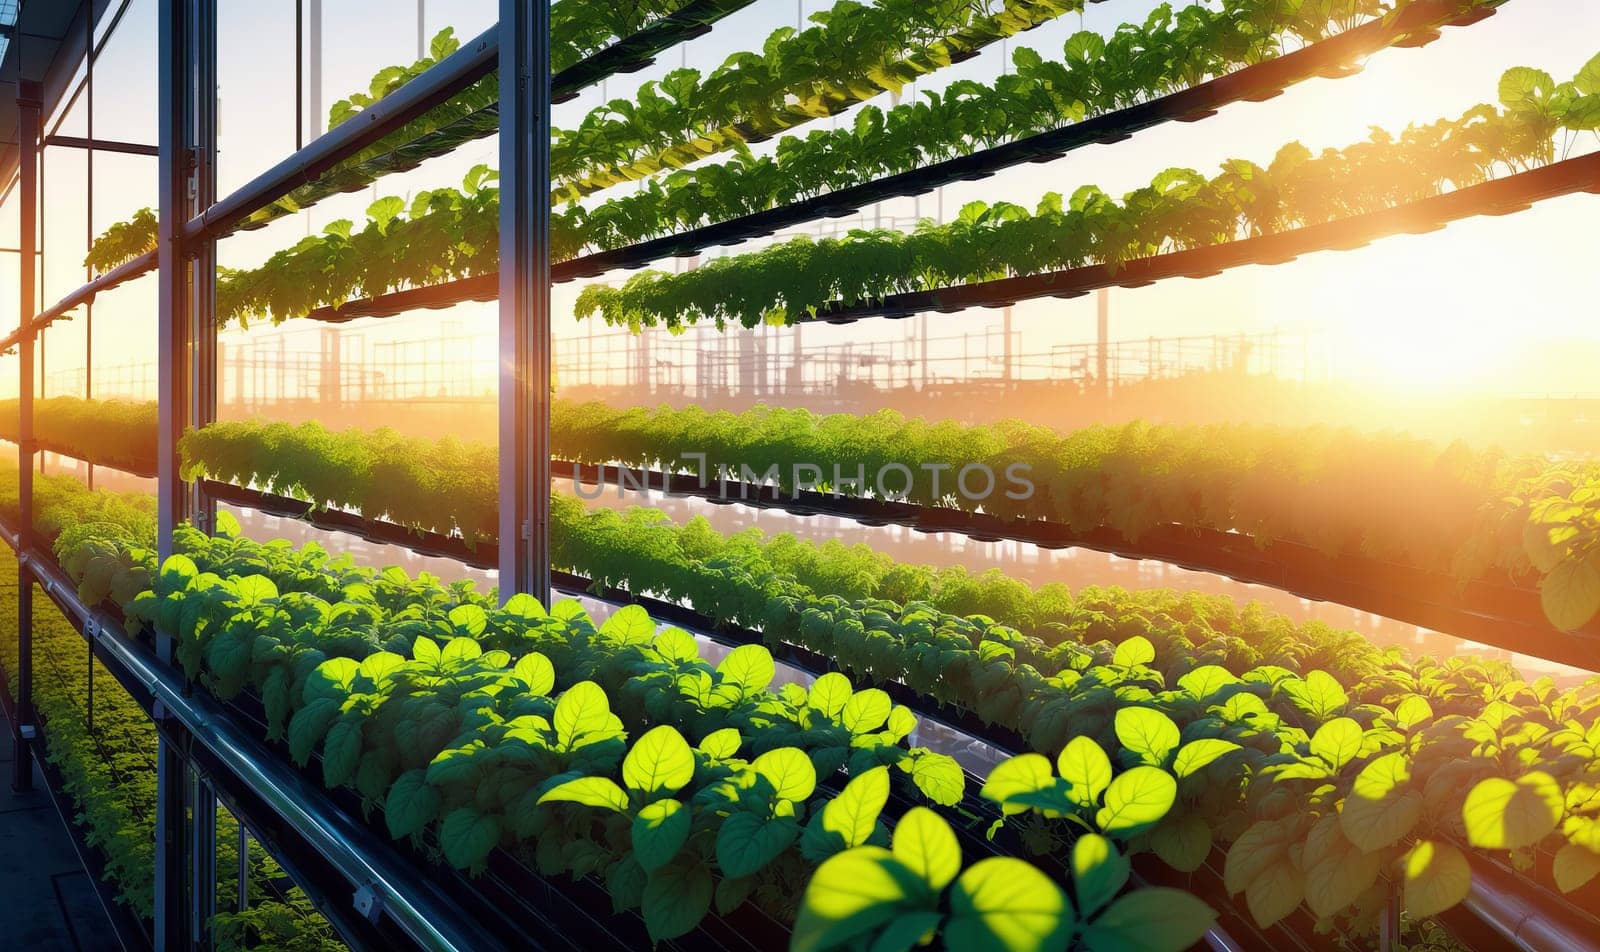 Sunlight filters through greenhouse, illuminating plants of various species by DCStudio